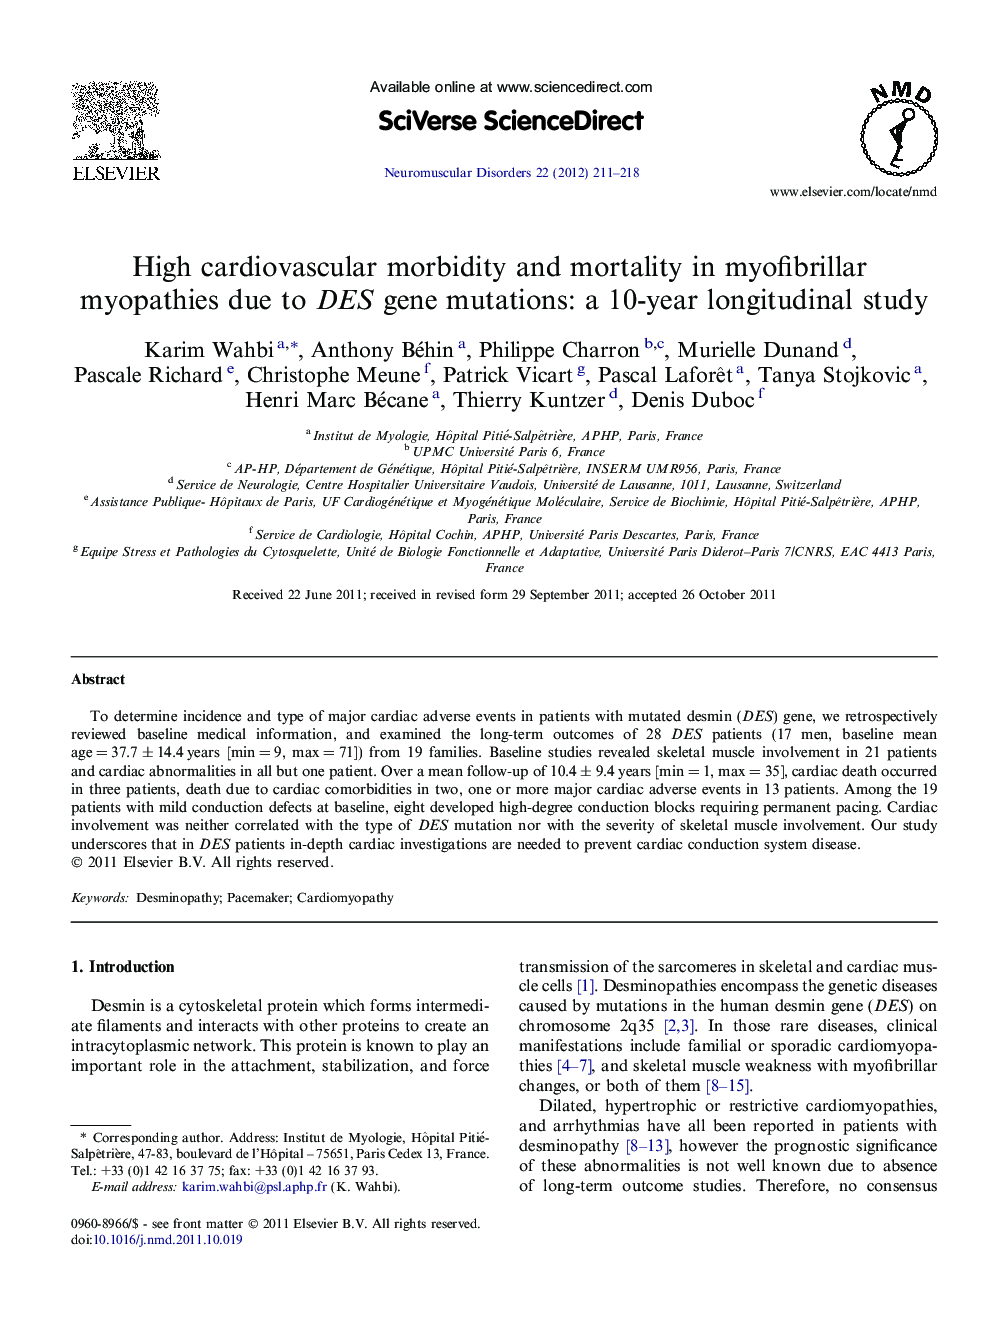 High cardiovascular morbidity and mortality in myofibrillar myopathies due to DES gene mutations: a 10-year longitudinal study